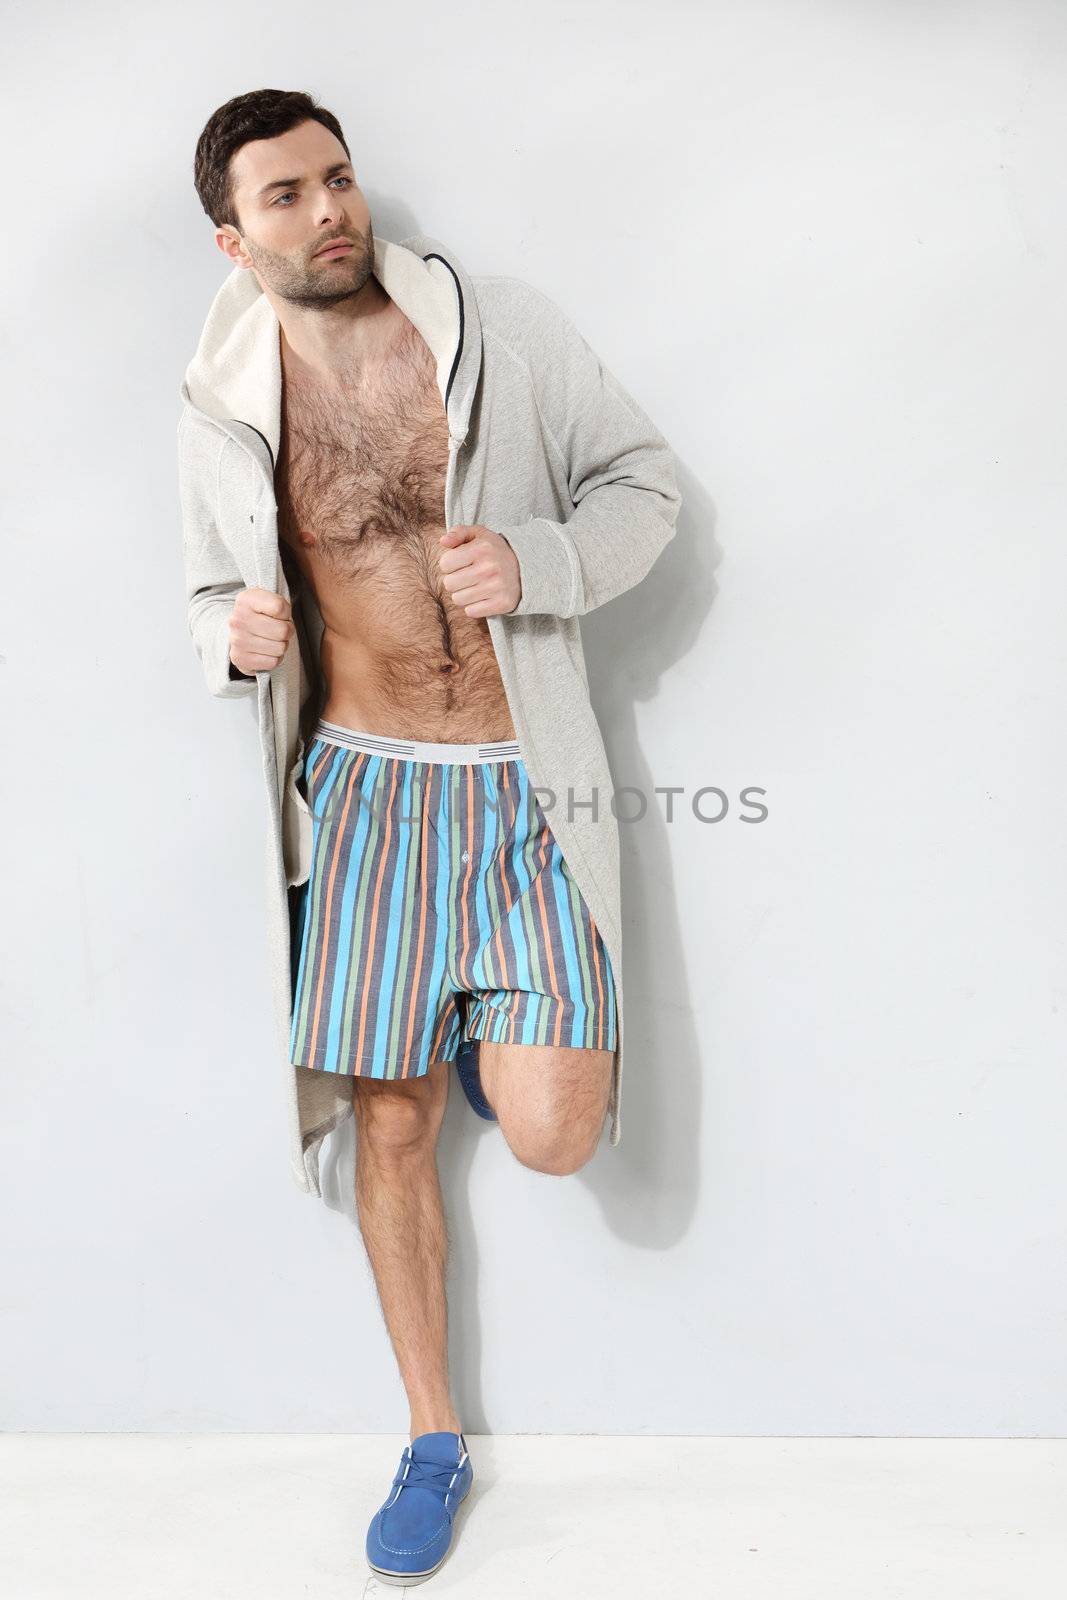 Stylish man in shorts on a gray background by robert_przybysz